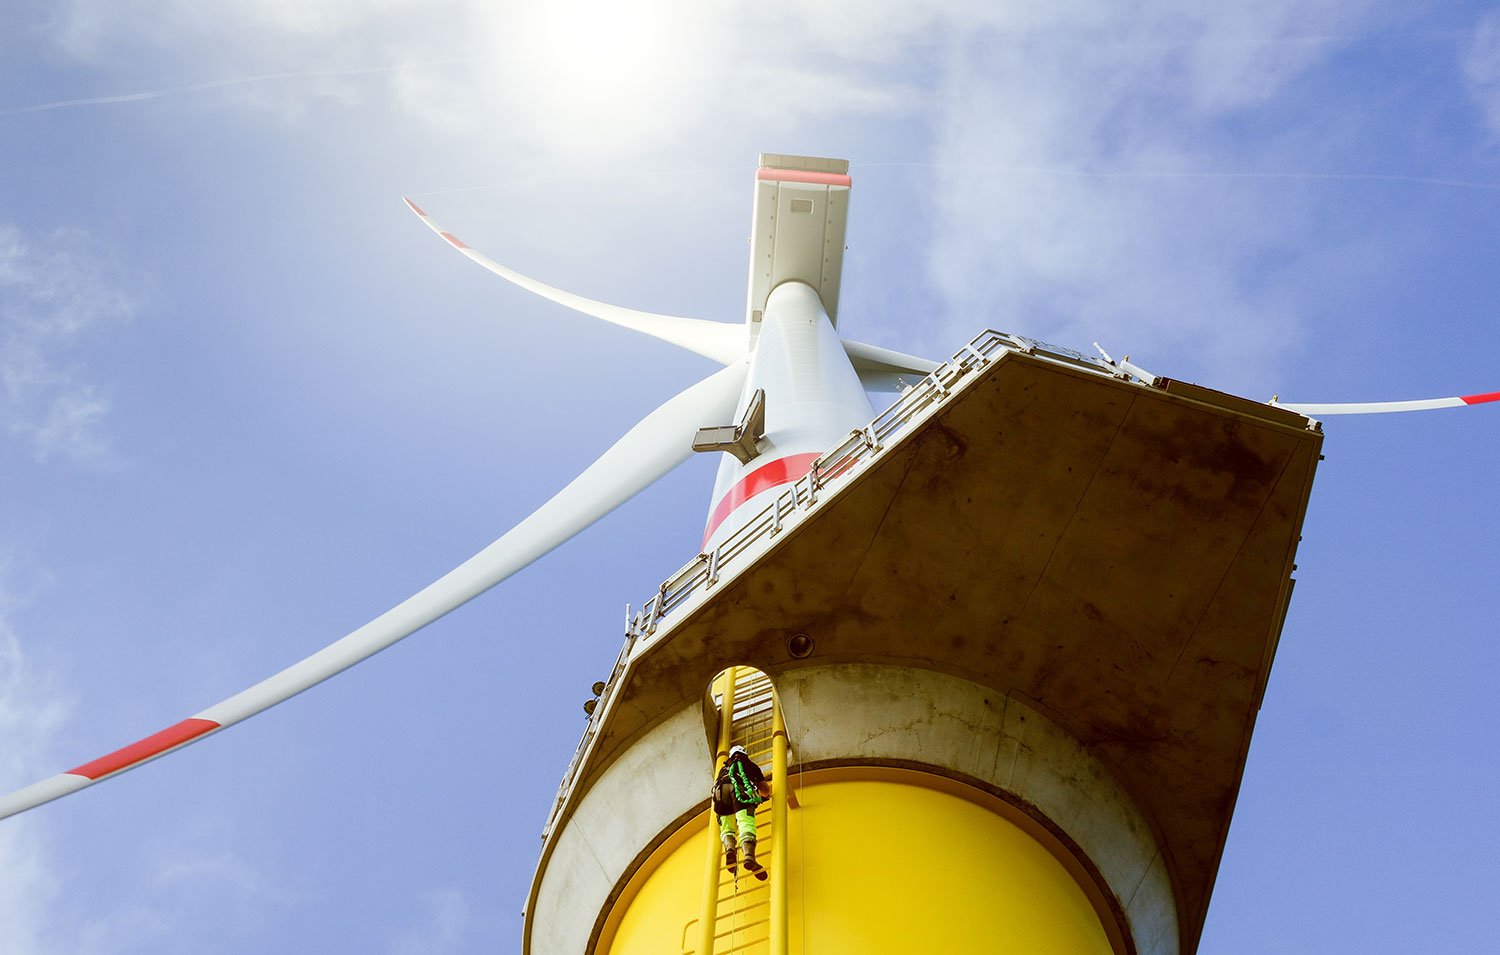 Servicetechniker-Jobs in der Windenergie